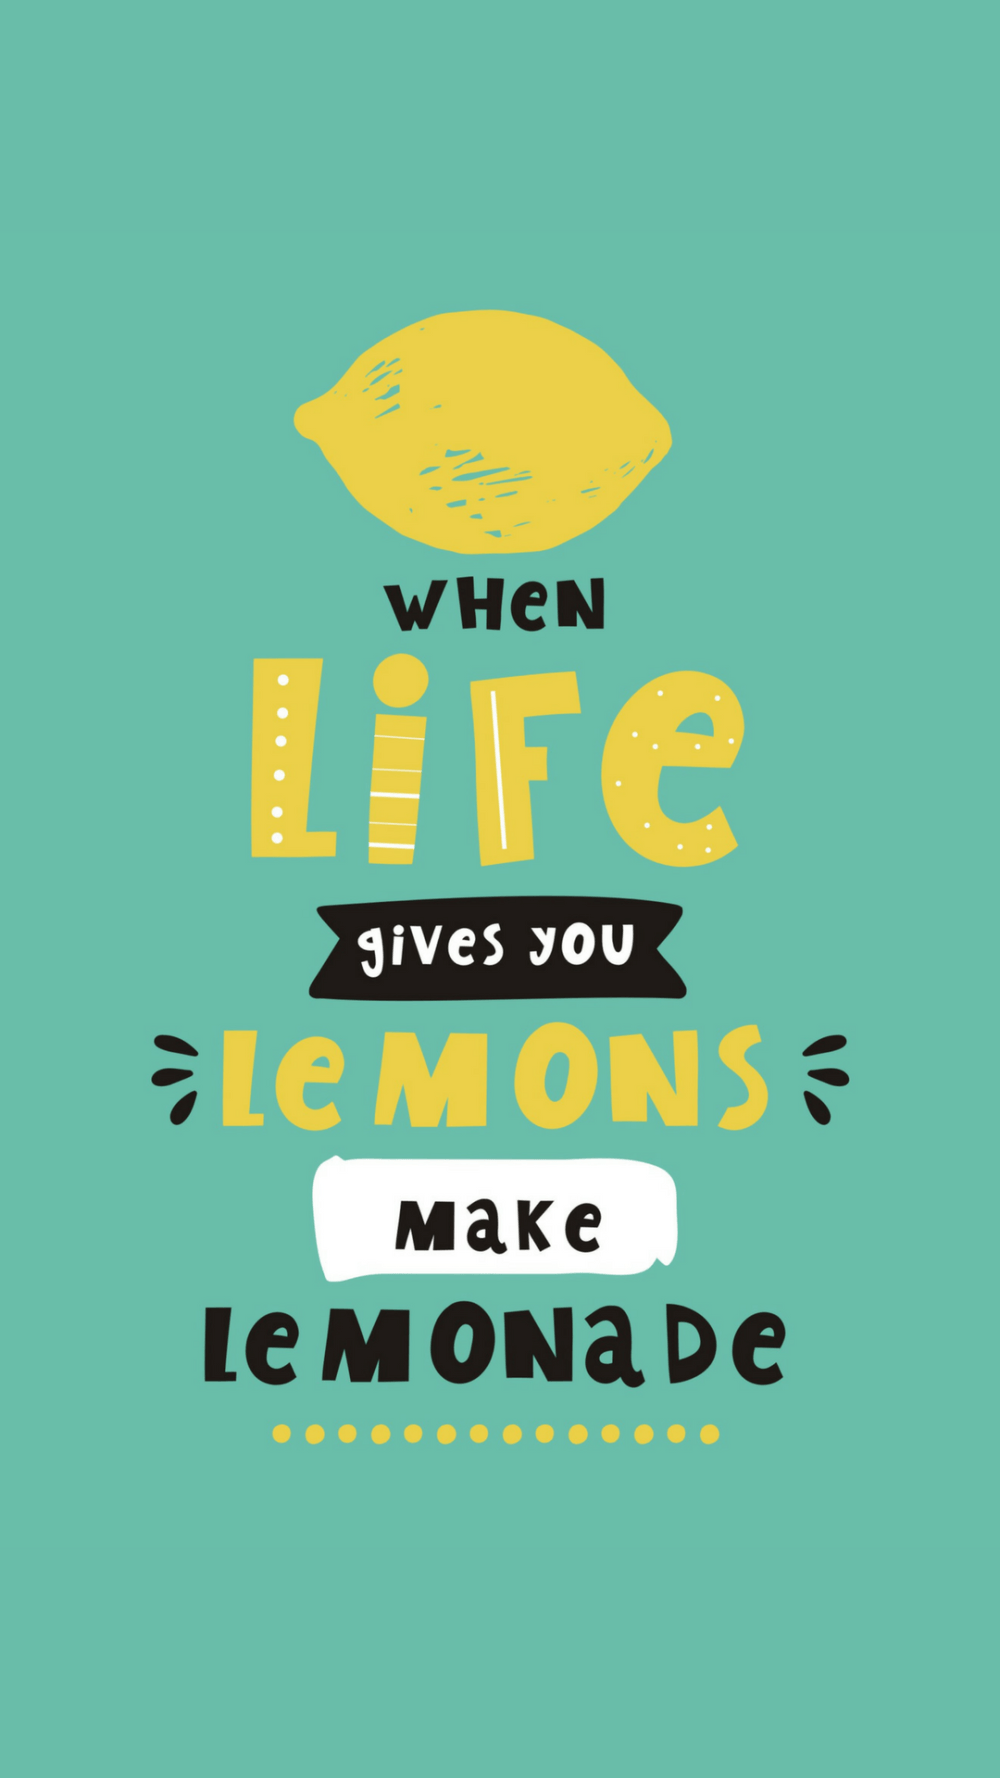 lemons gives lemonade wallpapers quote inspirational wallpapercave